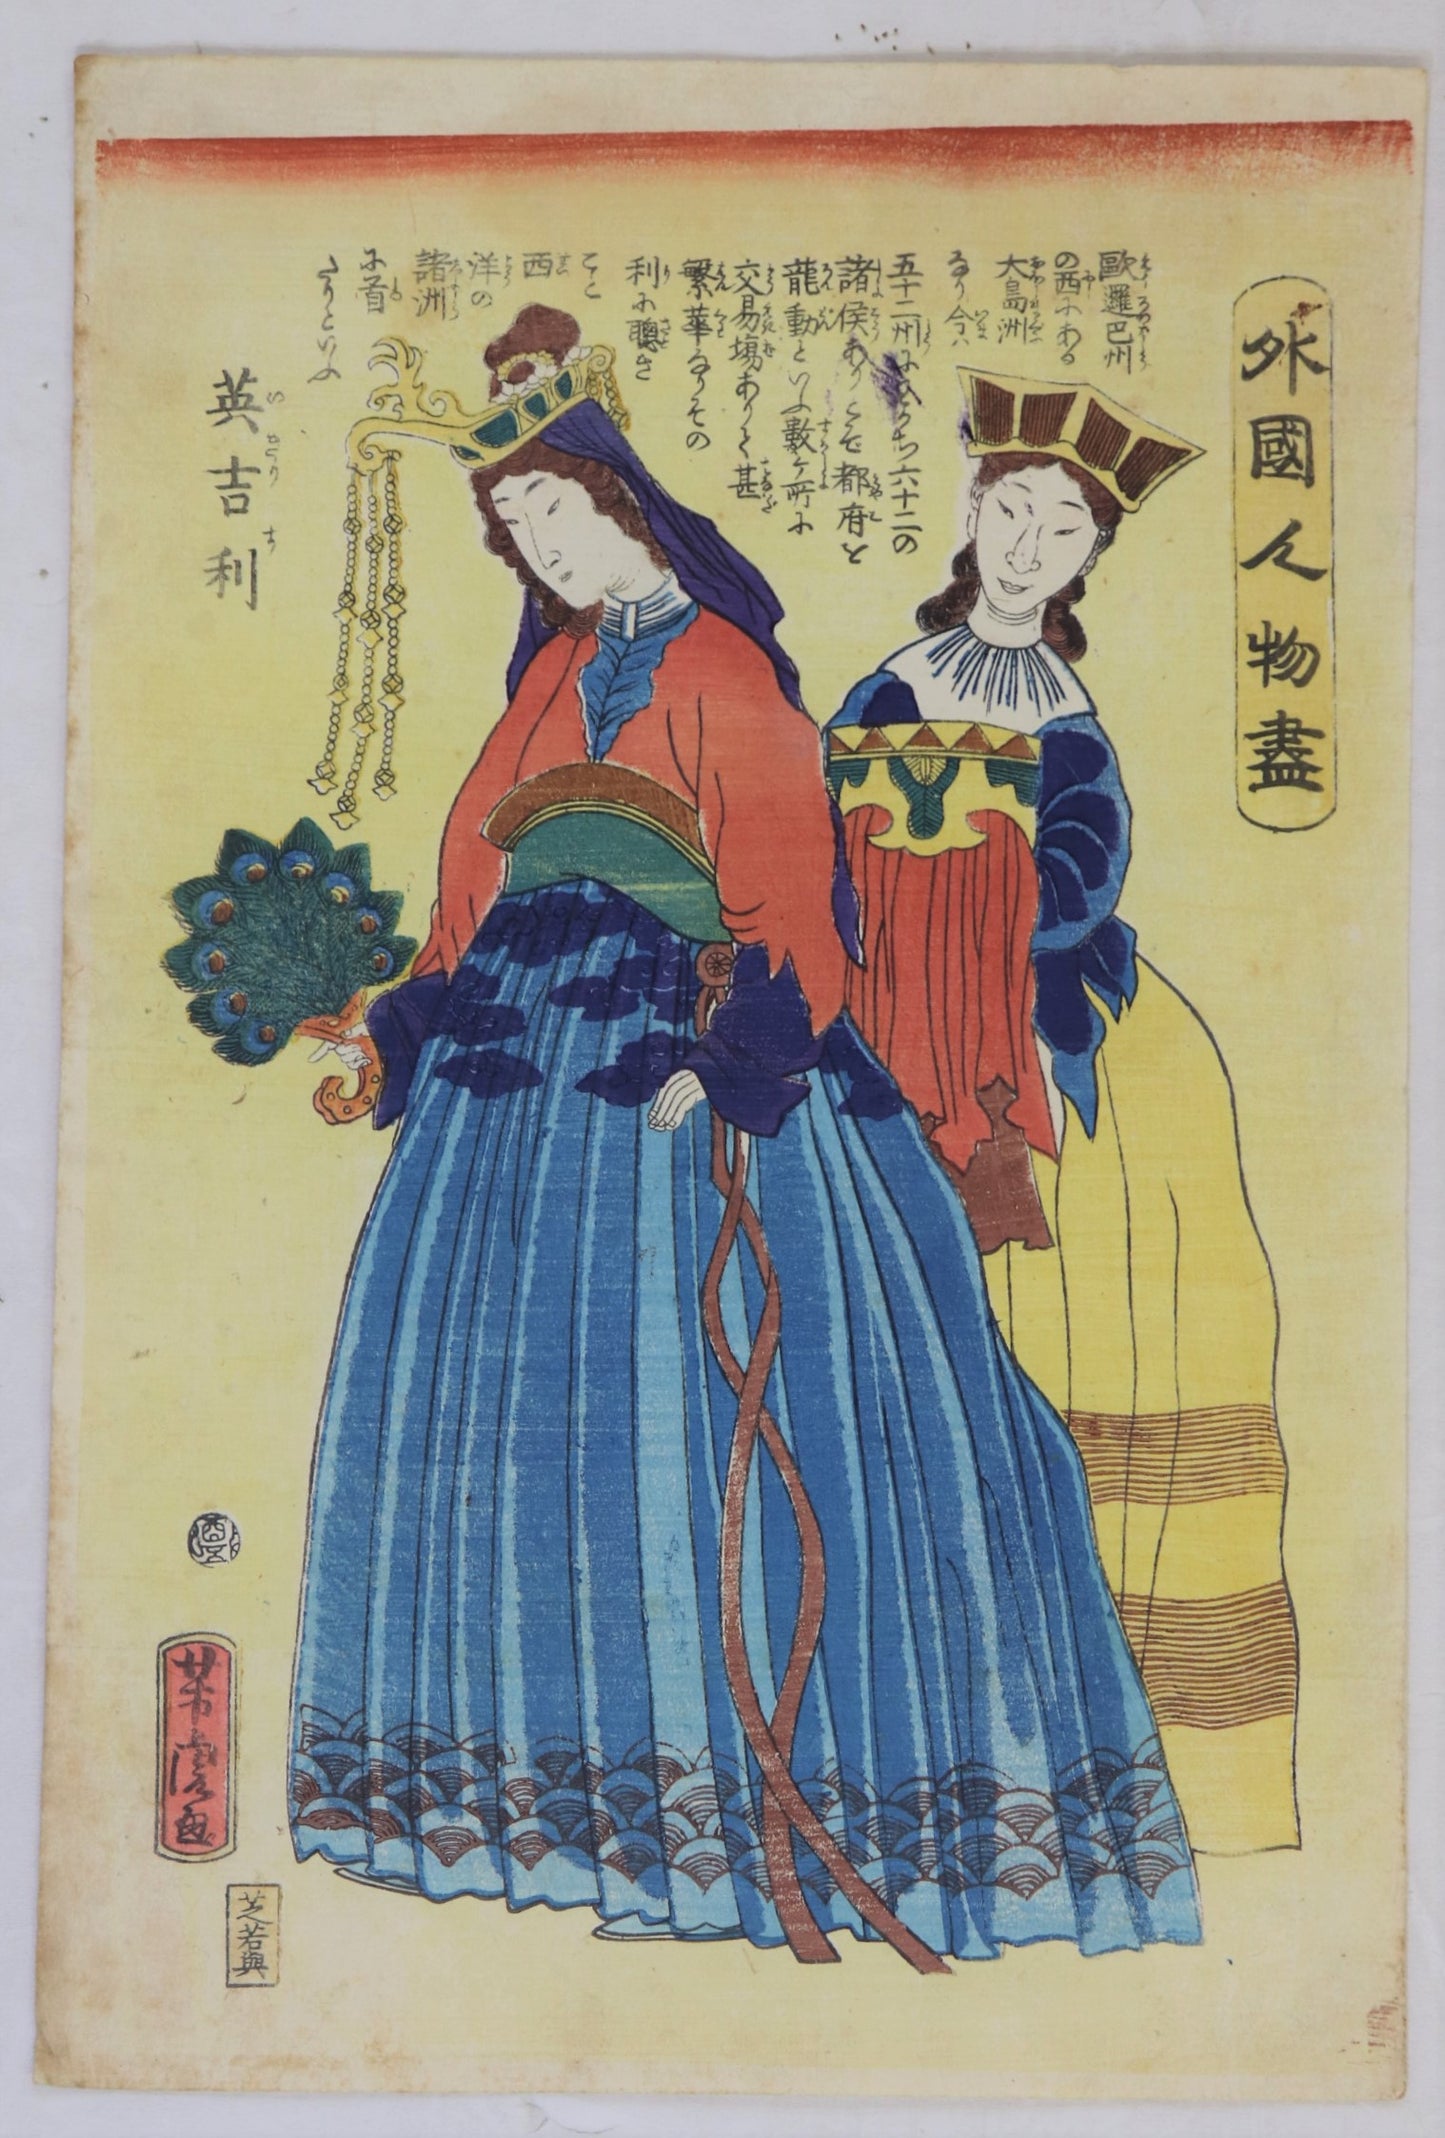 English Women by Yoshitora / Couple d'Anglaises par Yoshitora (1861)